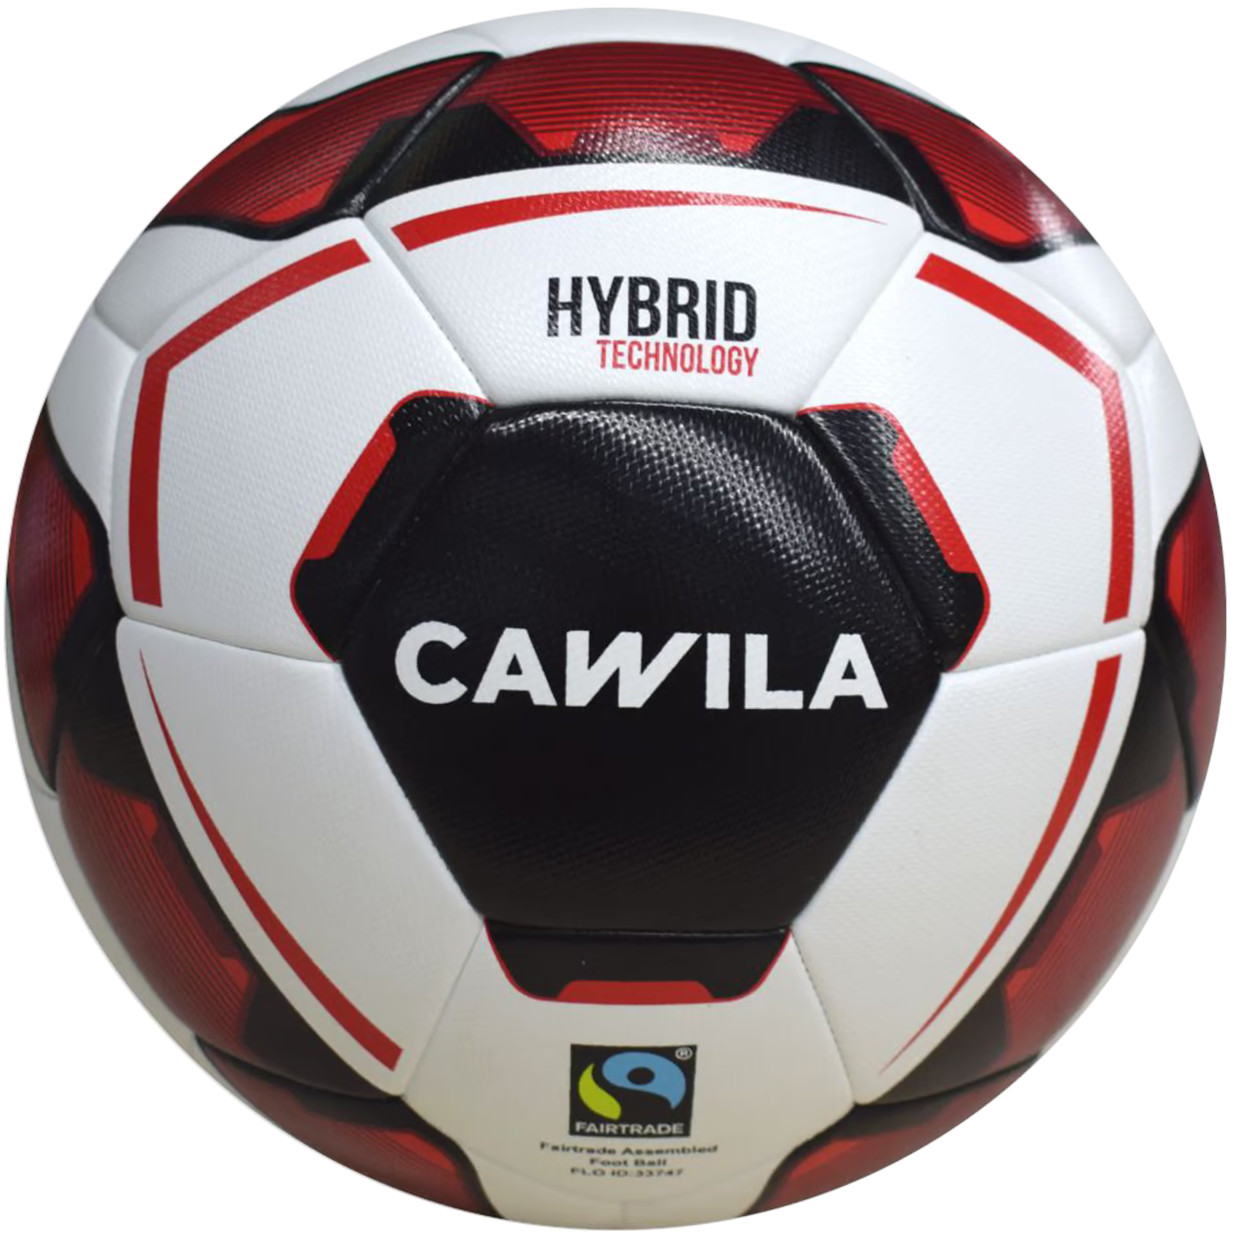 Bola Cawila Fußball MISSION HYBRID Fairtrade